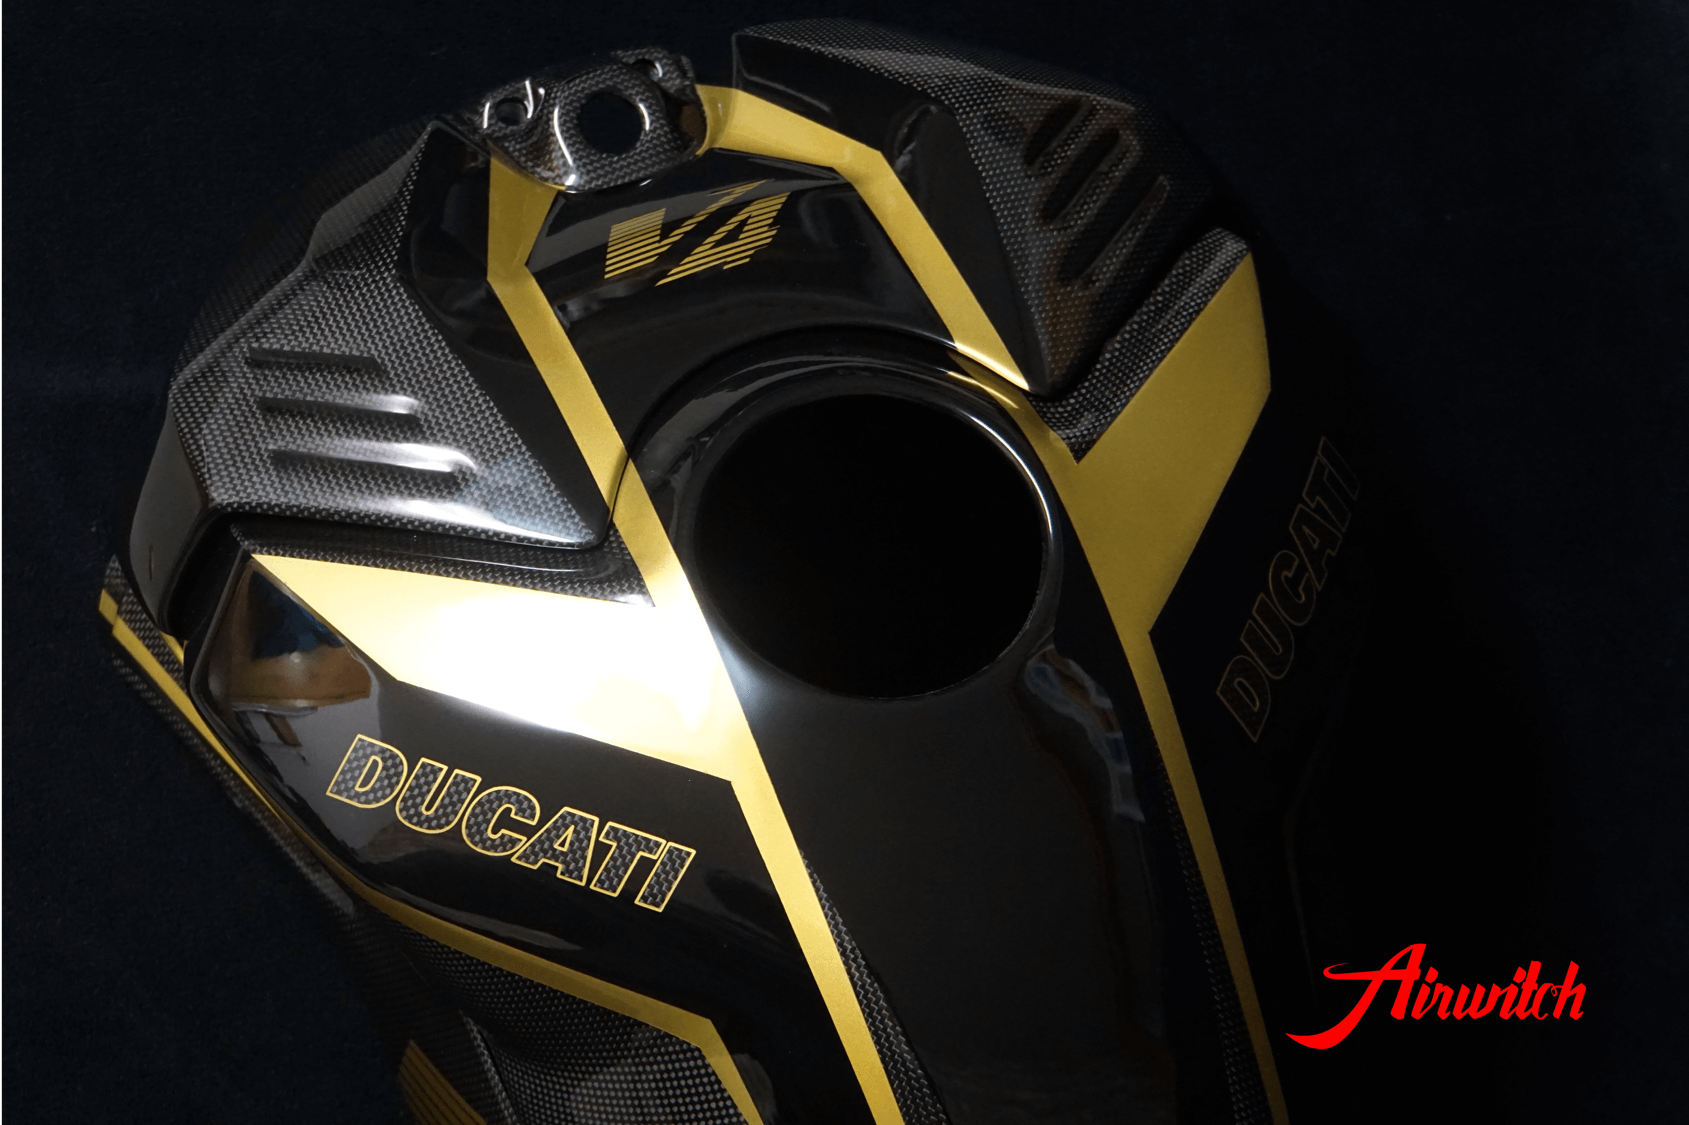 Custom Paint Ducati Panigale V4 Carbon Parts Lackierung Gold & Black La catrina